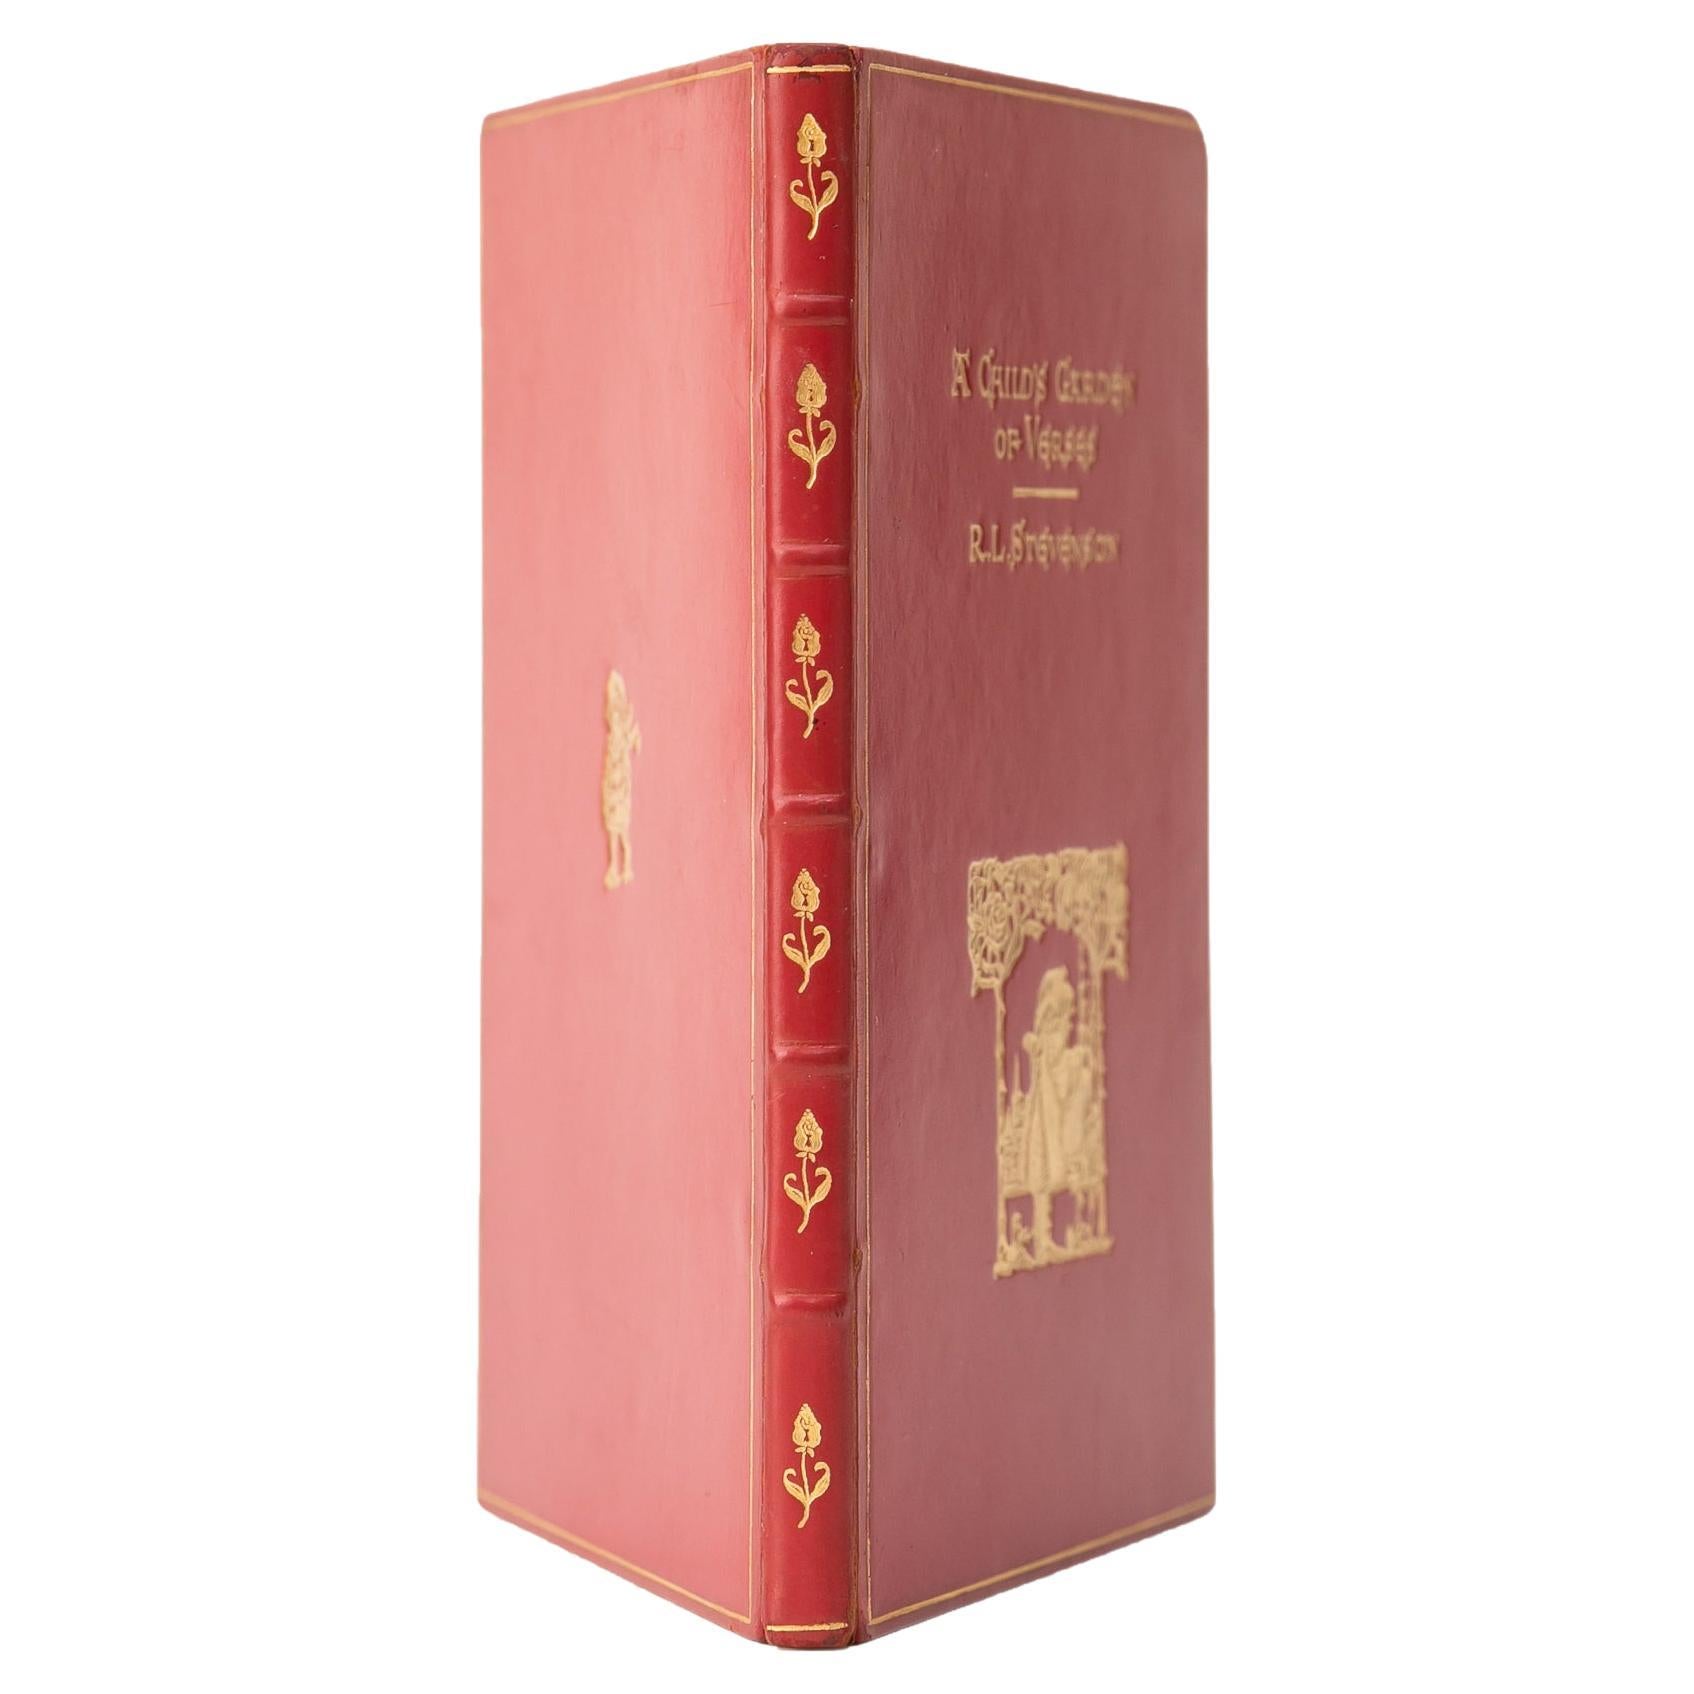 1 Volume. Robert Louis Stevenson, A Child's Garden of Verses. For Sale